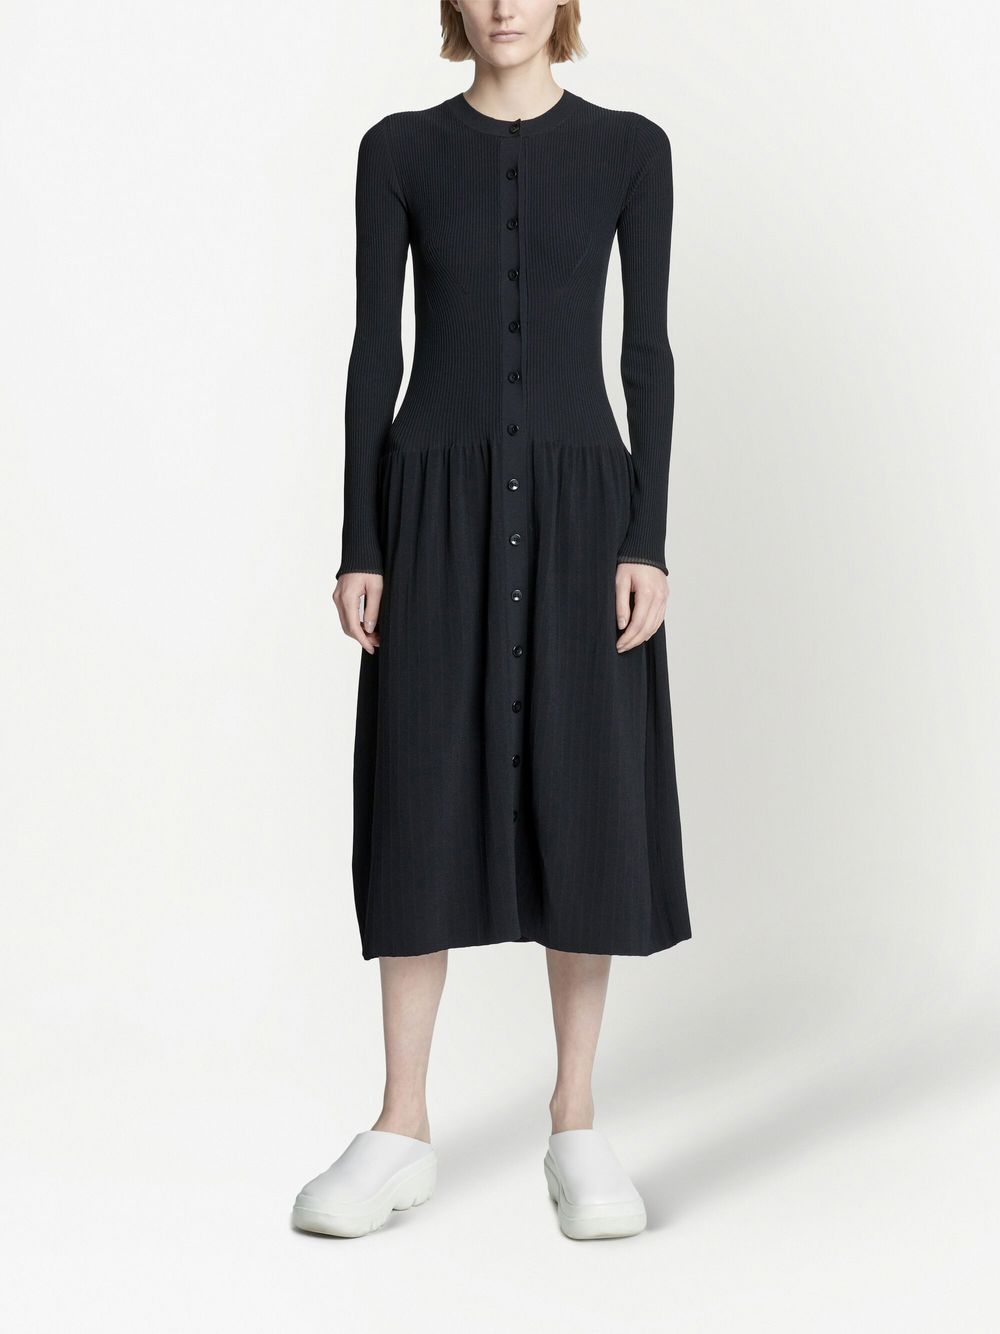 Proenza Schouler White Label ribbed-knit button-front Dress - Farfetch